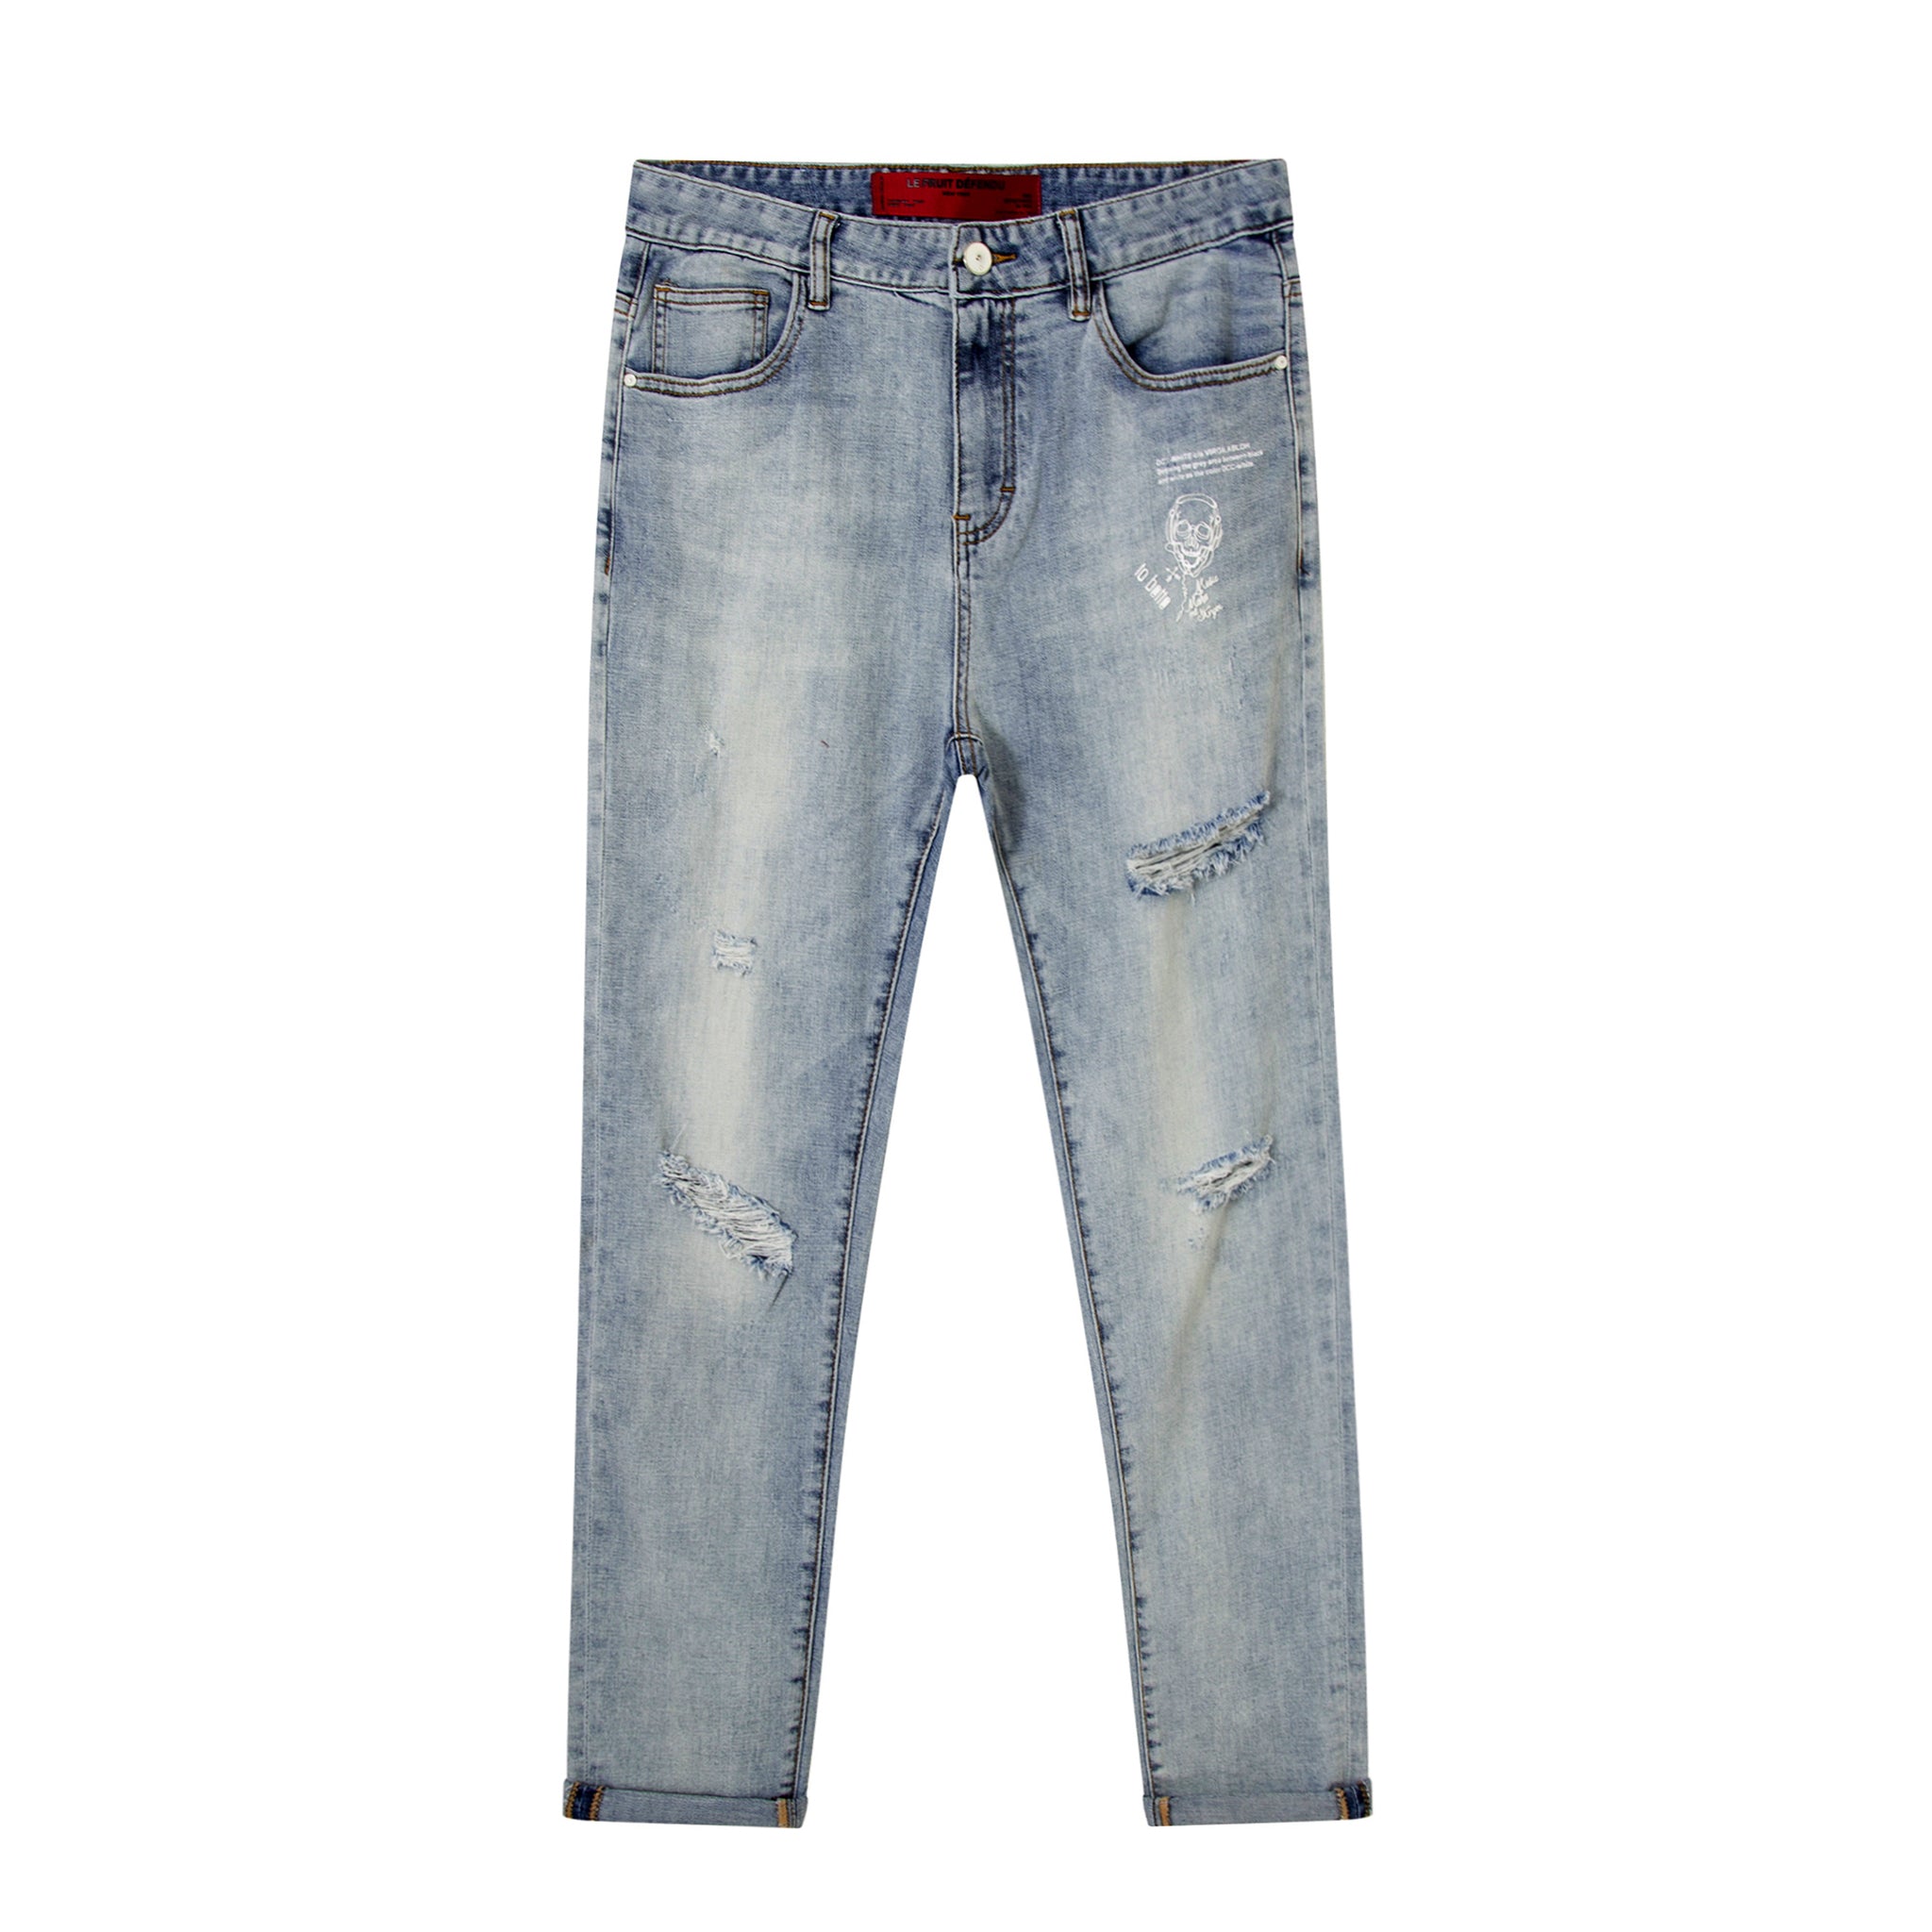 PT TORINO: jeans for men - Stone Washed | Pt Torino jeans C5RJ05B10STYTX29  online at GIGLIO.COM